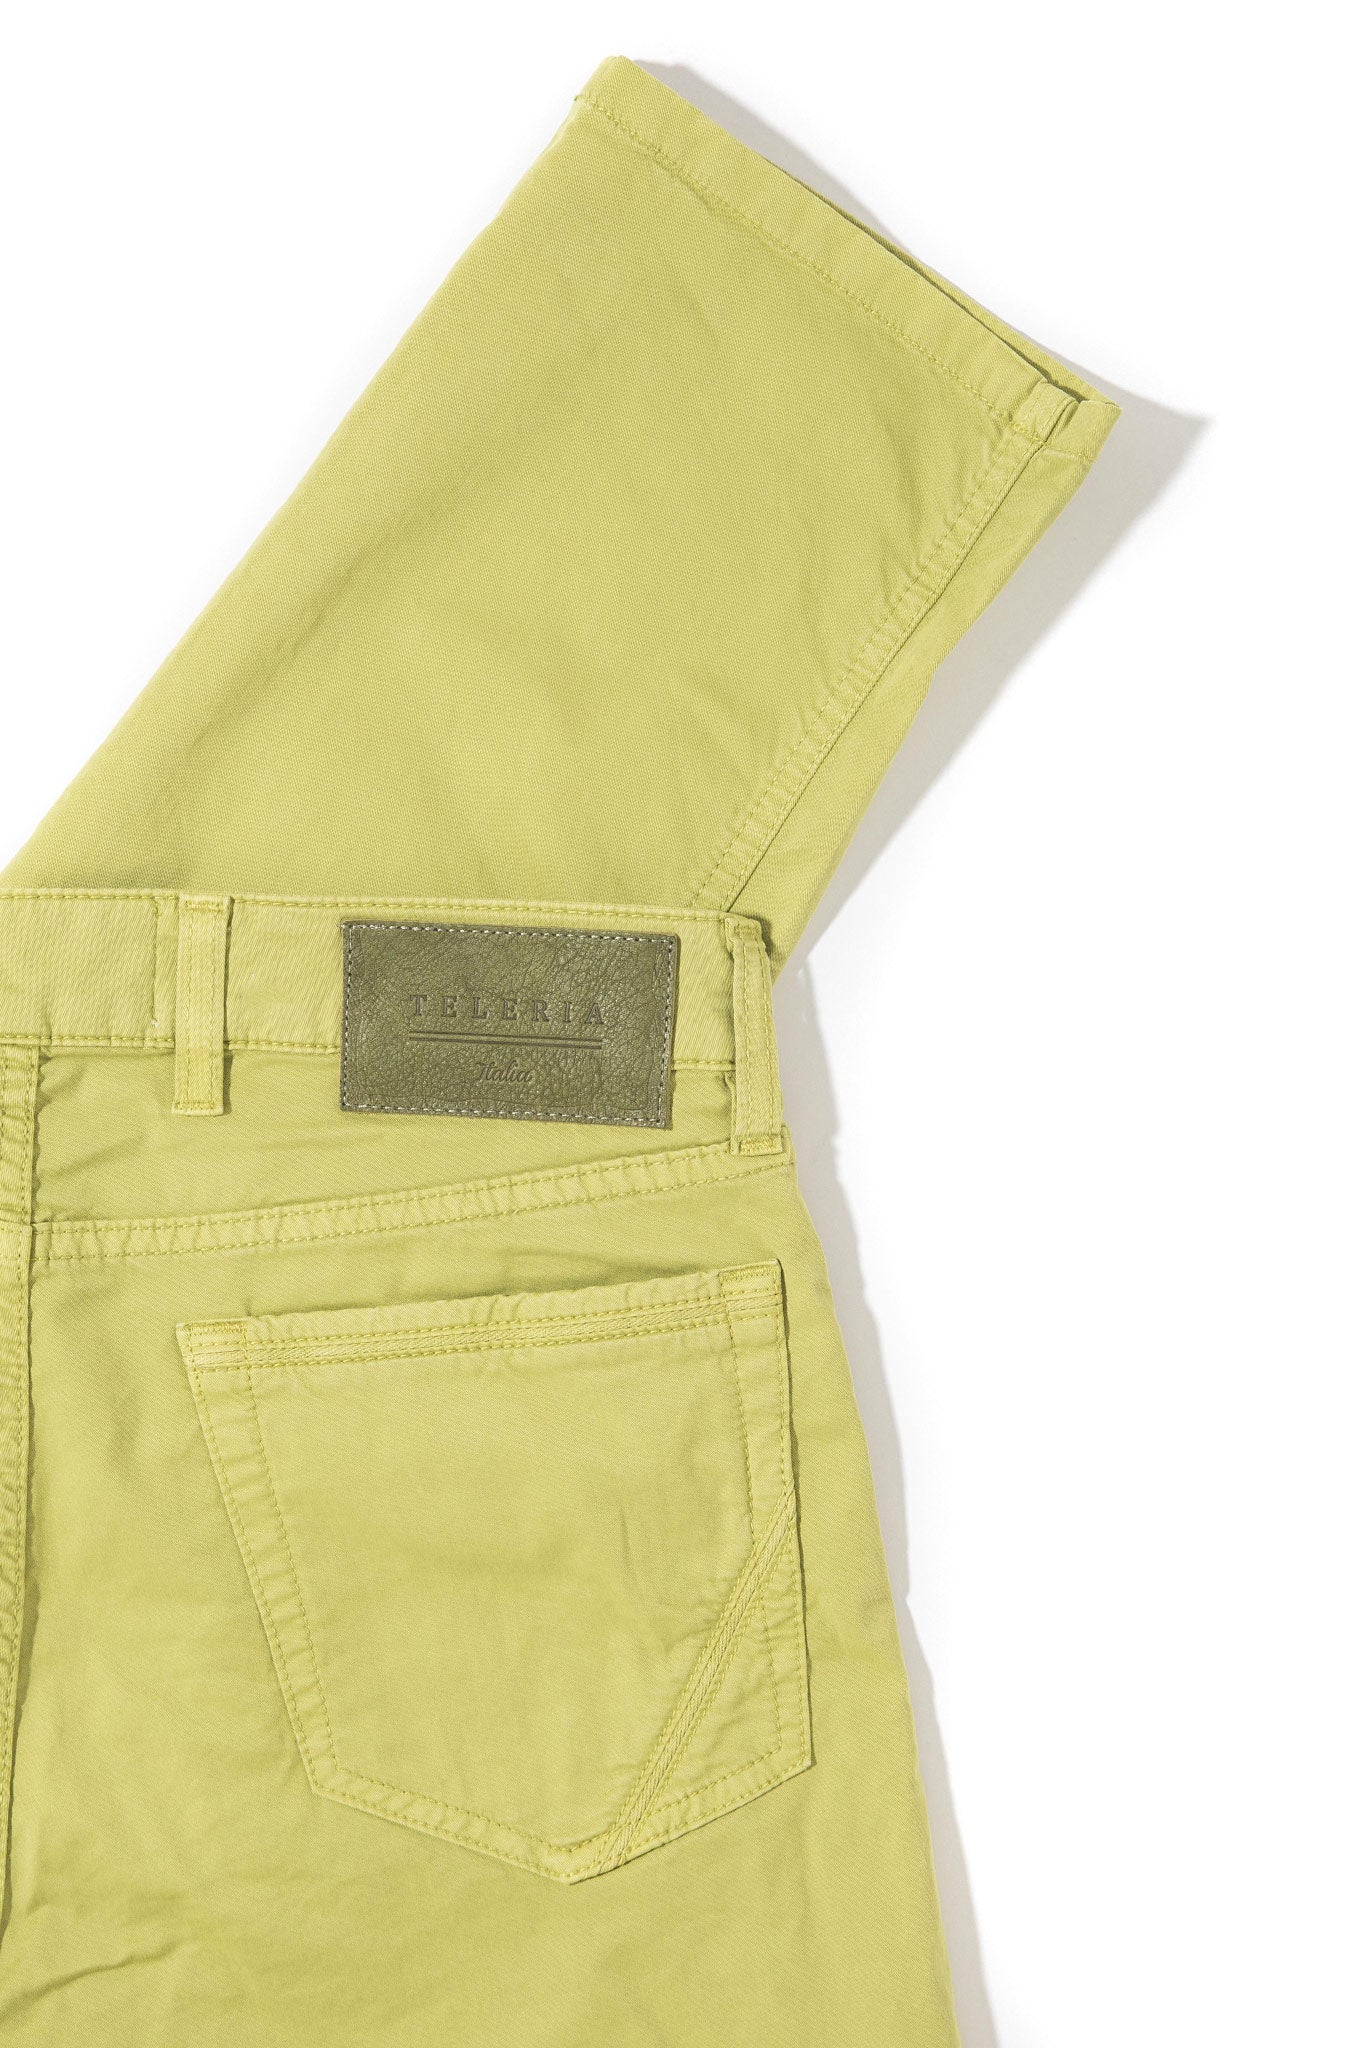 Fowler Ultralight Performance Pant In Lime | Mens - Pants - 5 Pocket | Teleria Zed